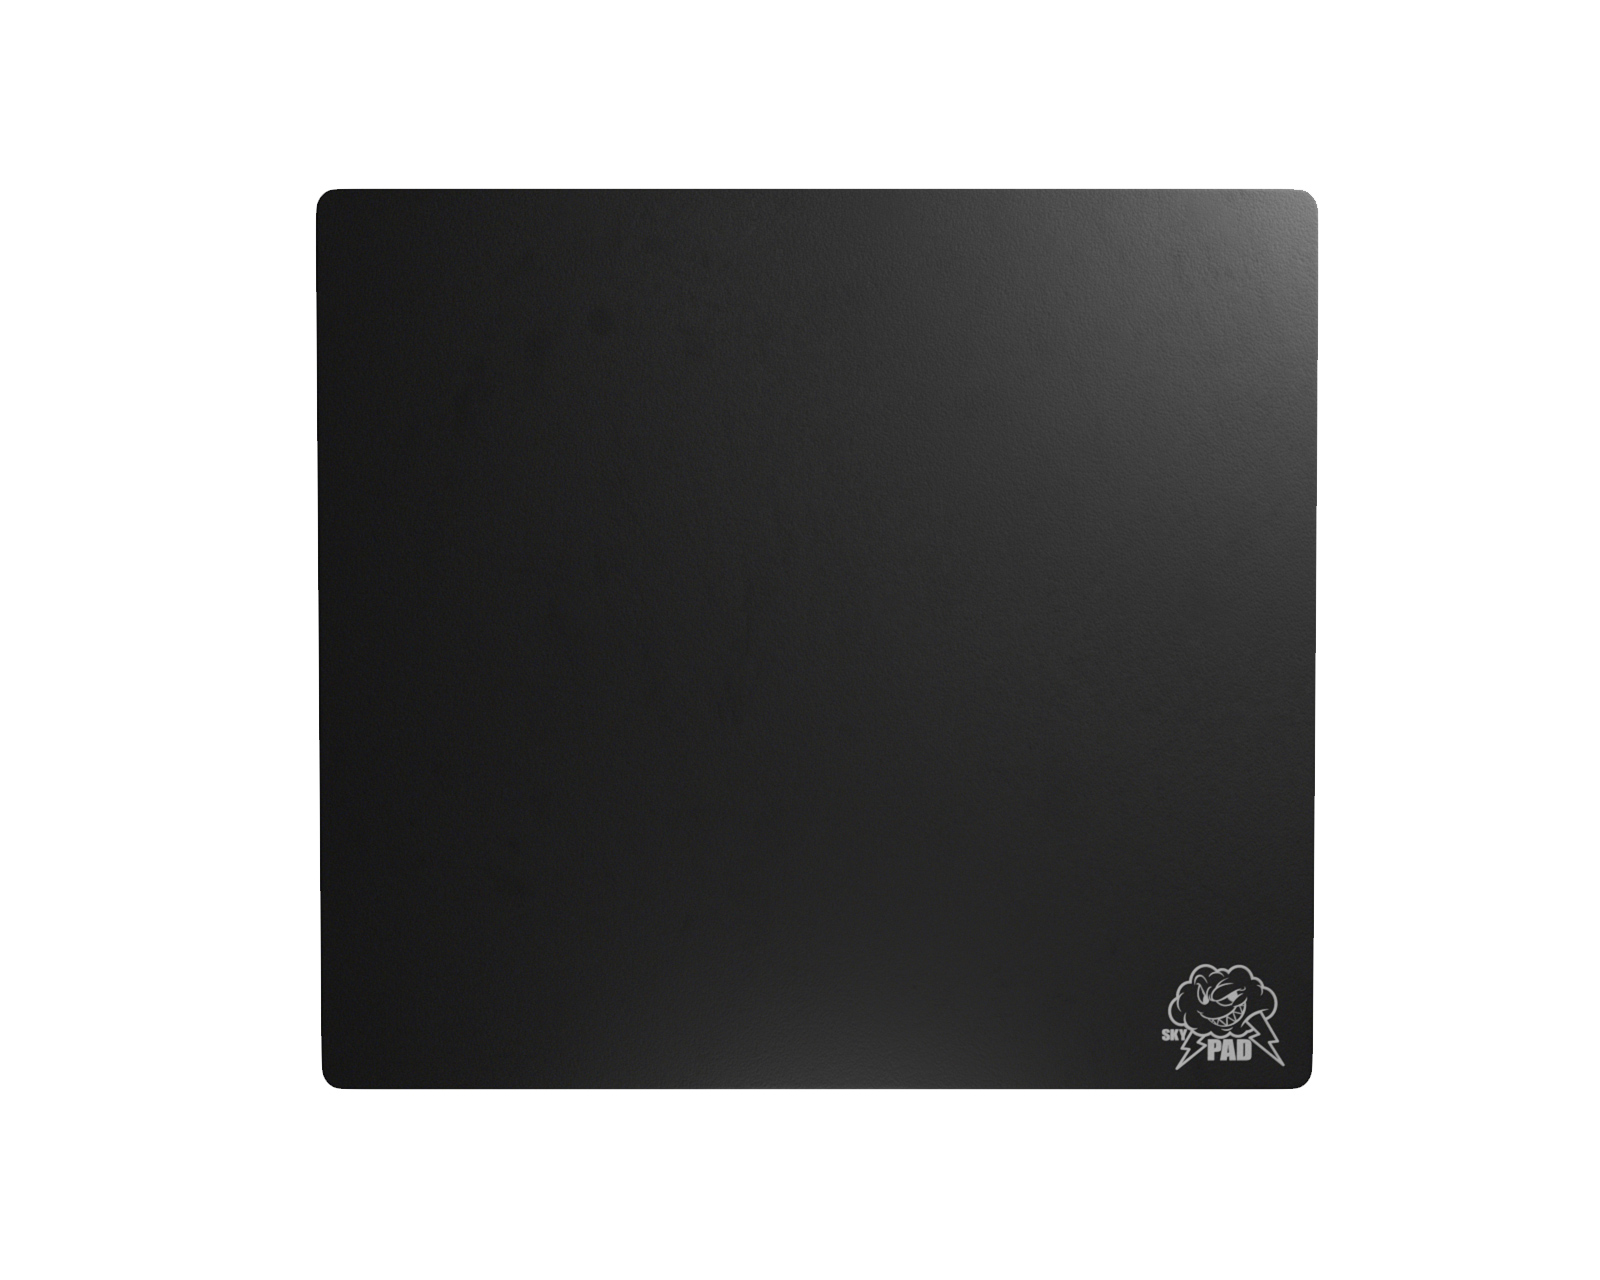 Skypad Glass 3.0 (Black - Cloud Logo) - Mousepad - us.MaxGaming.com